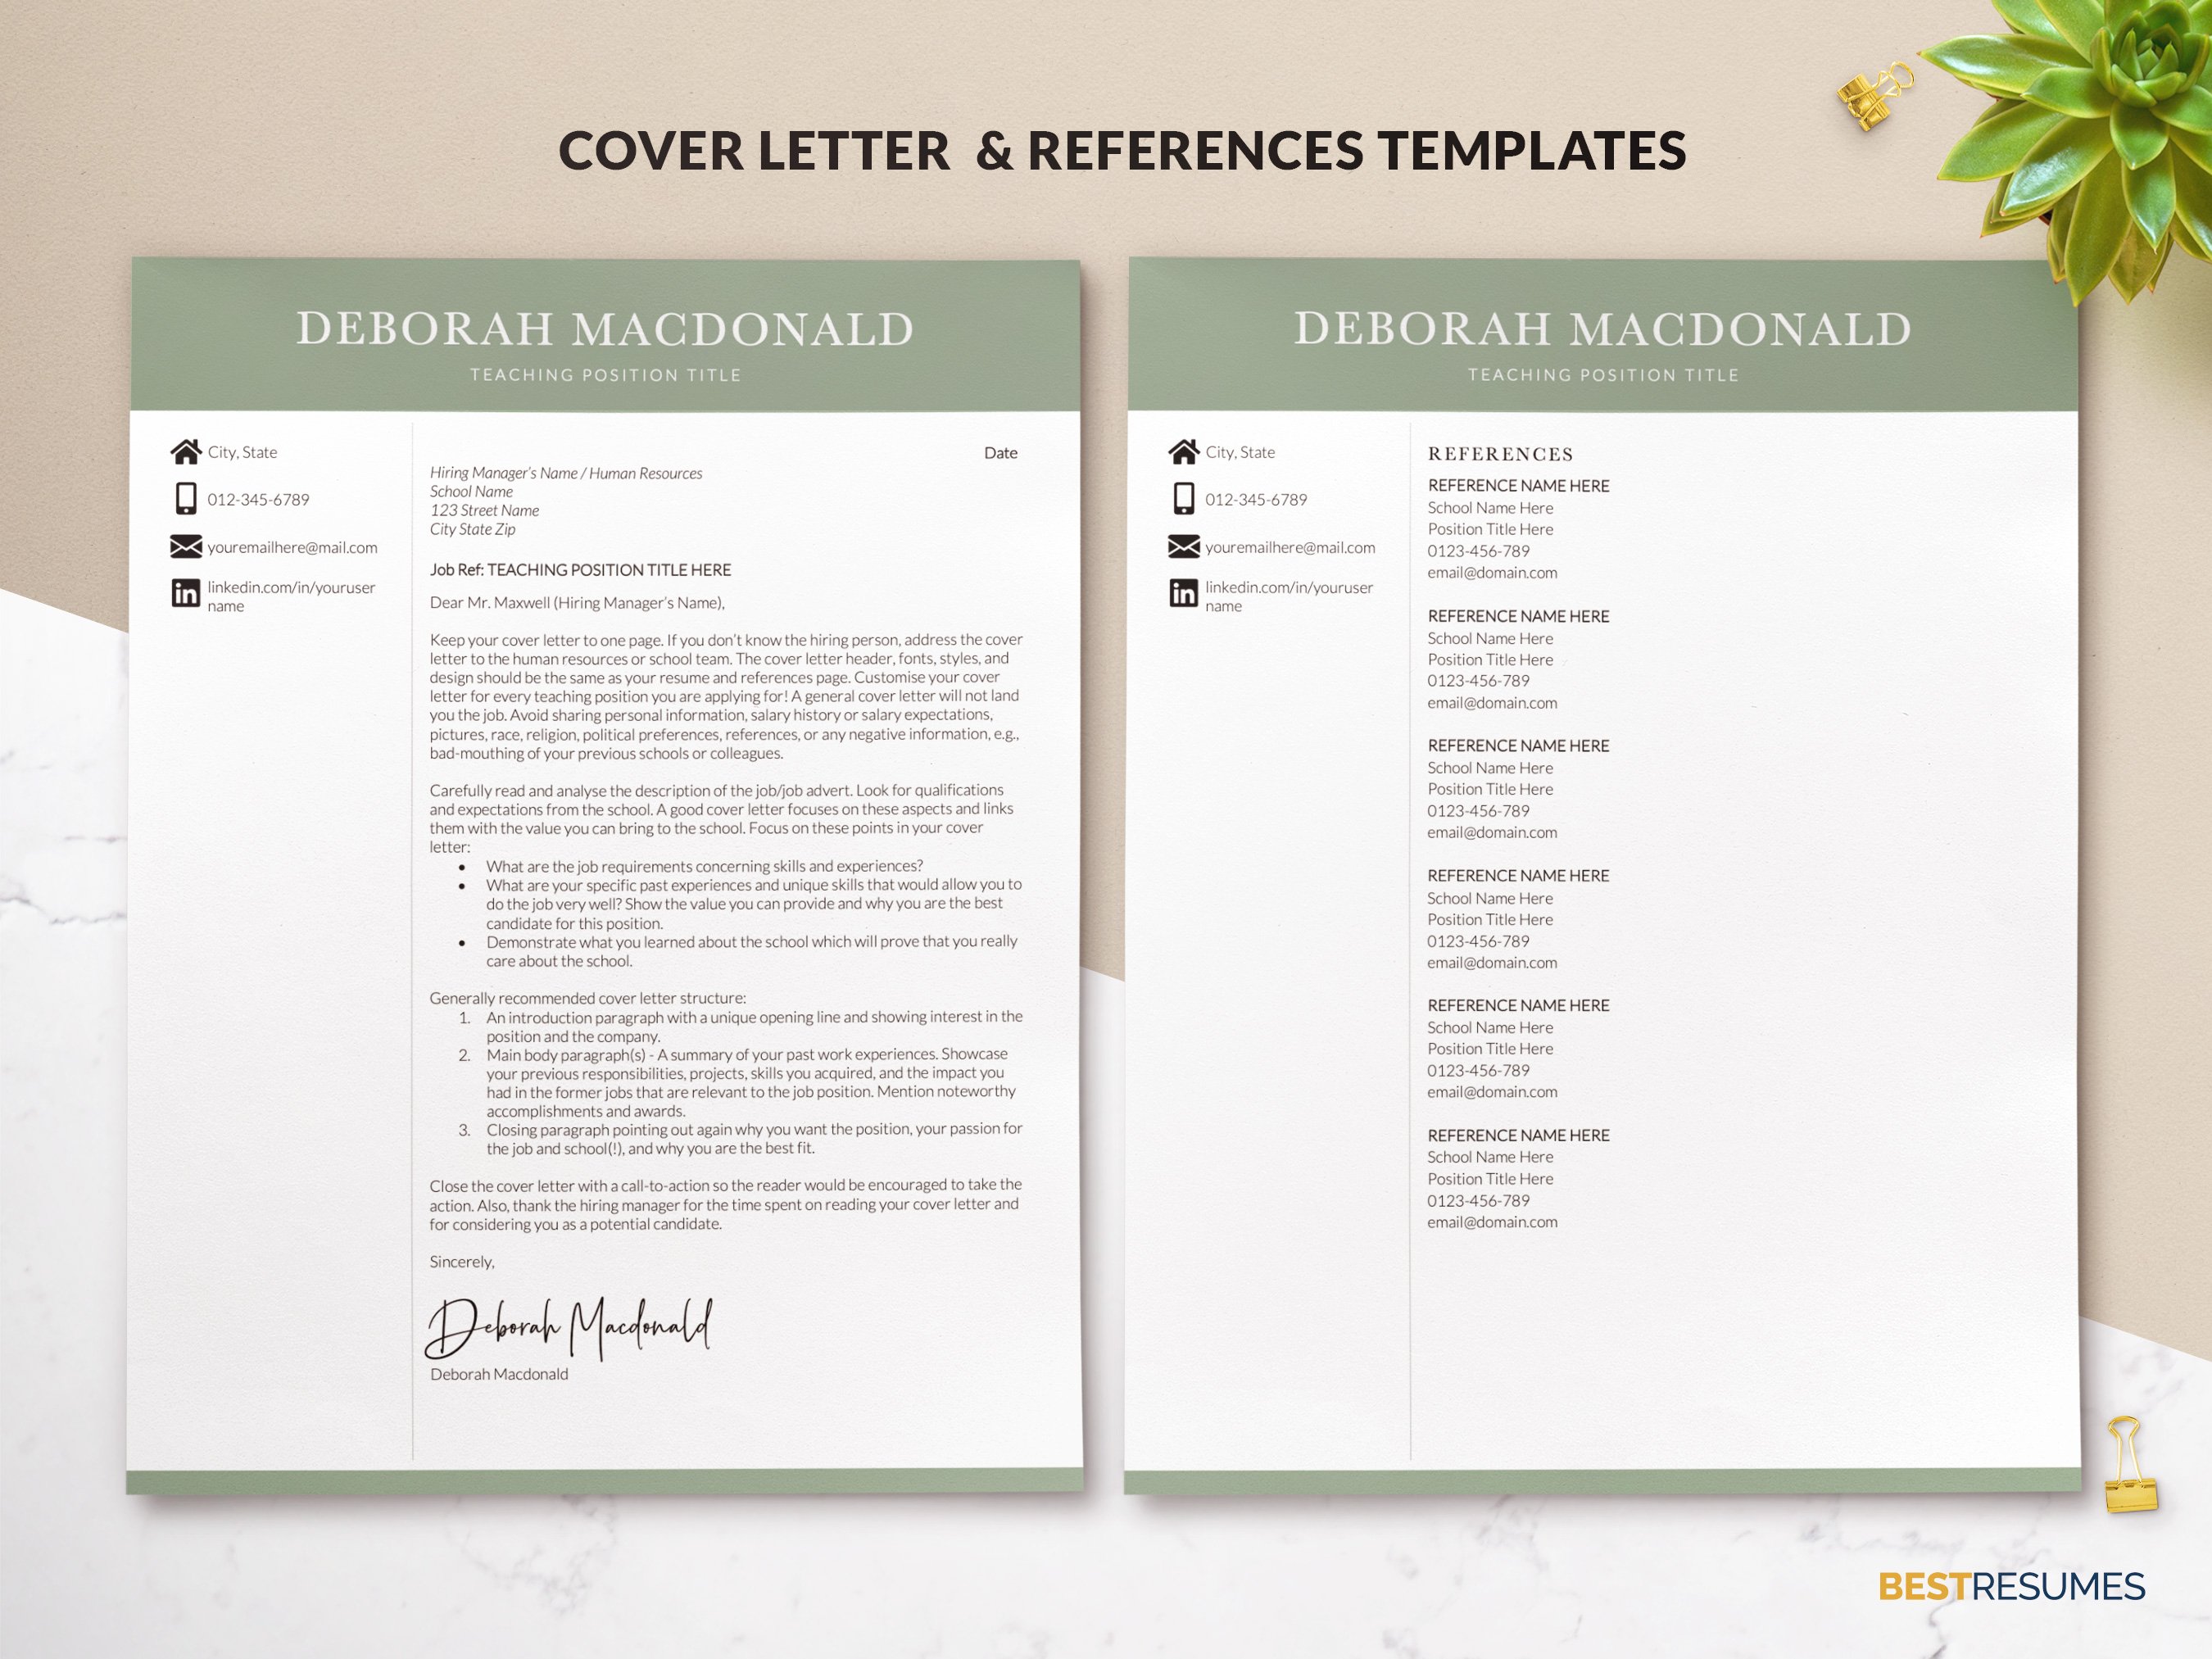 modern resume for teachers template cover letter references page deborah macdonald 311